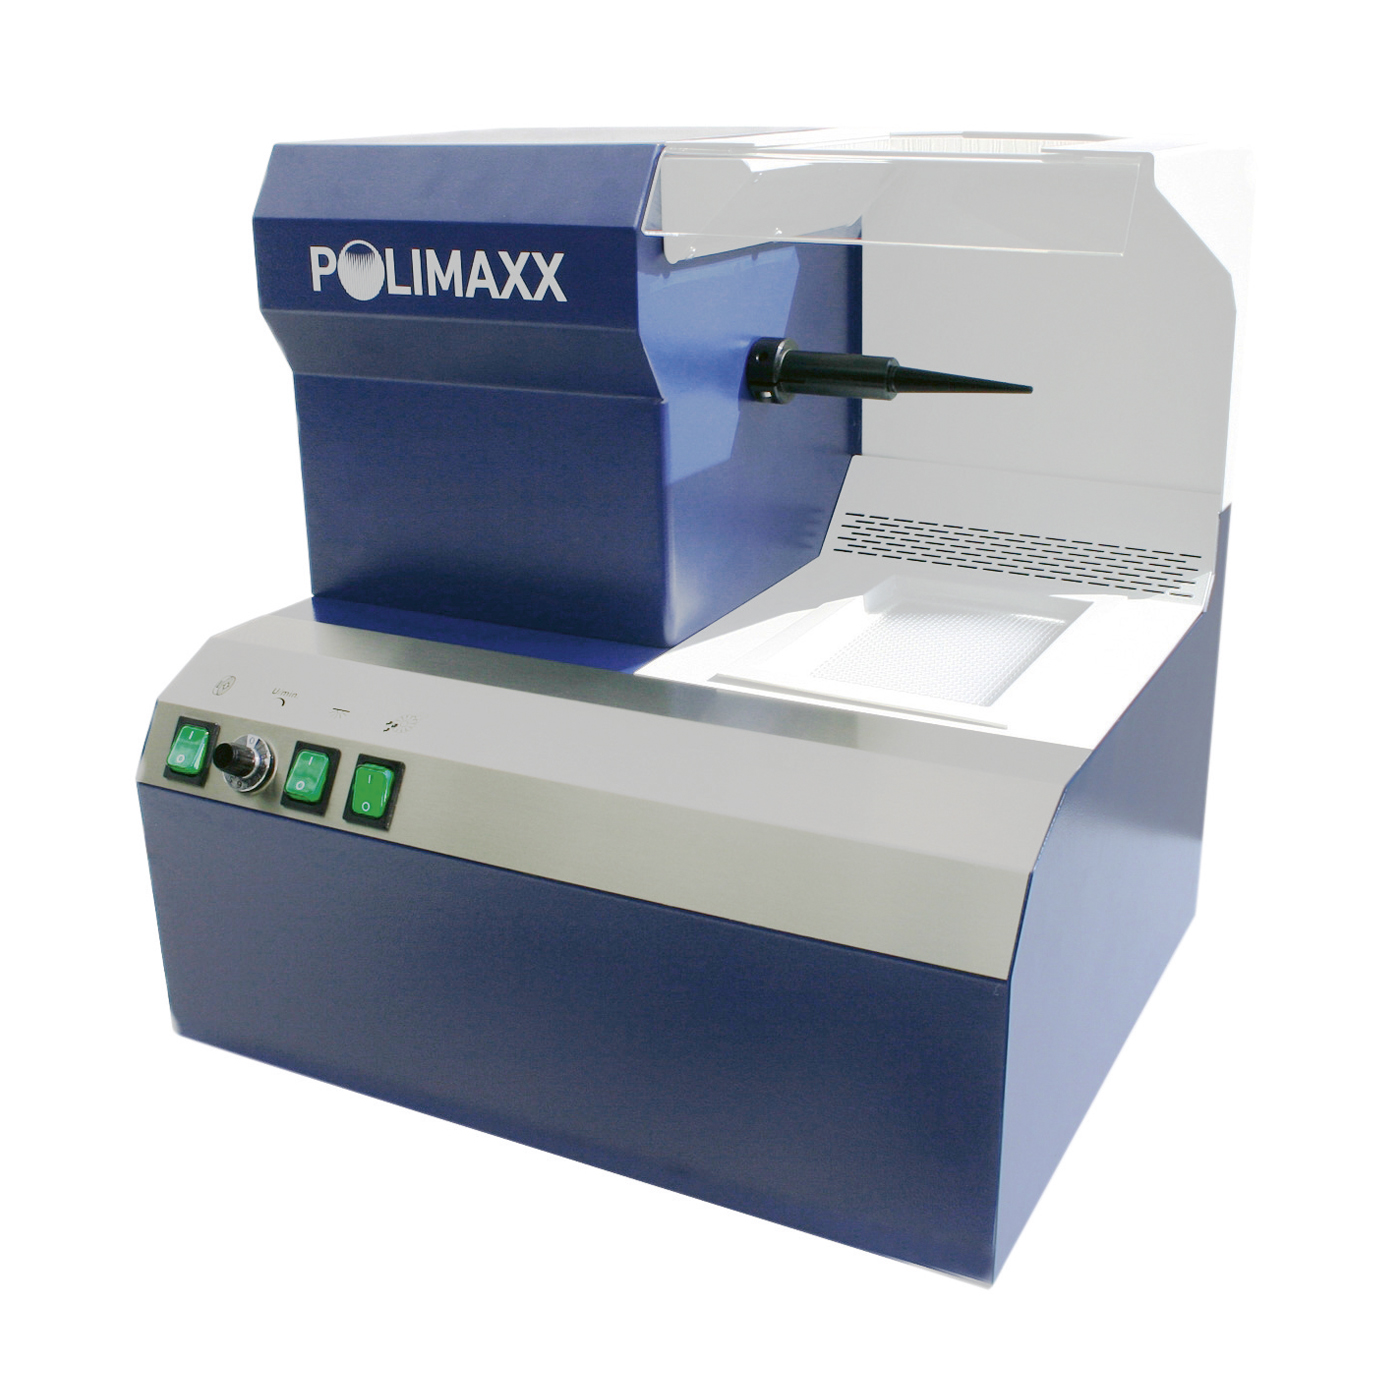 Polimaxx 1 D Polishing Unit - 1 piece